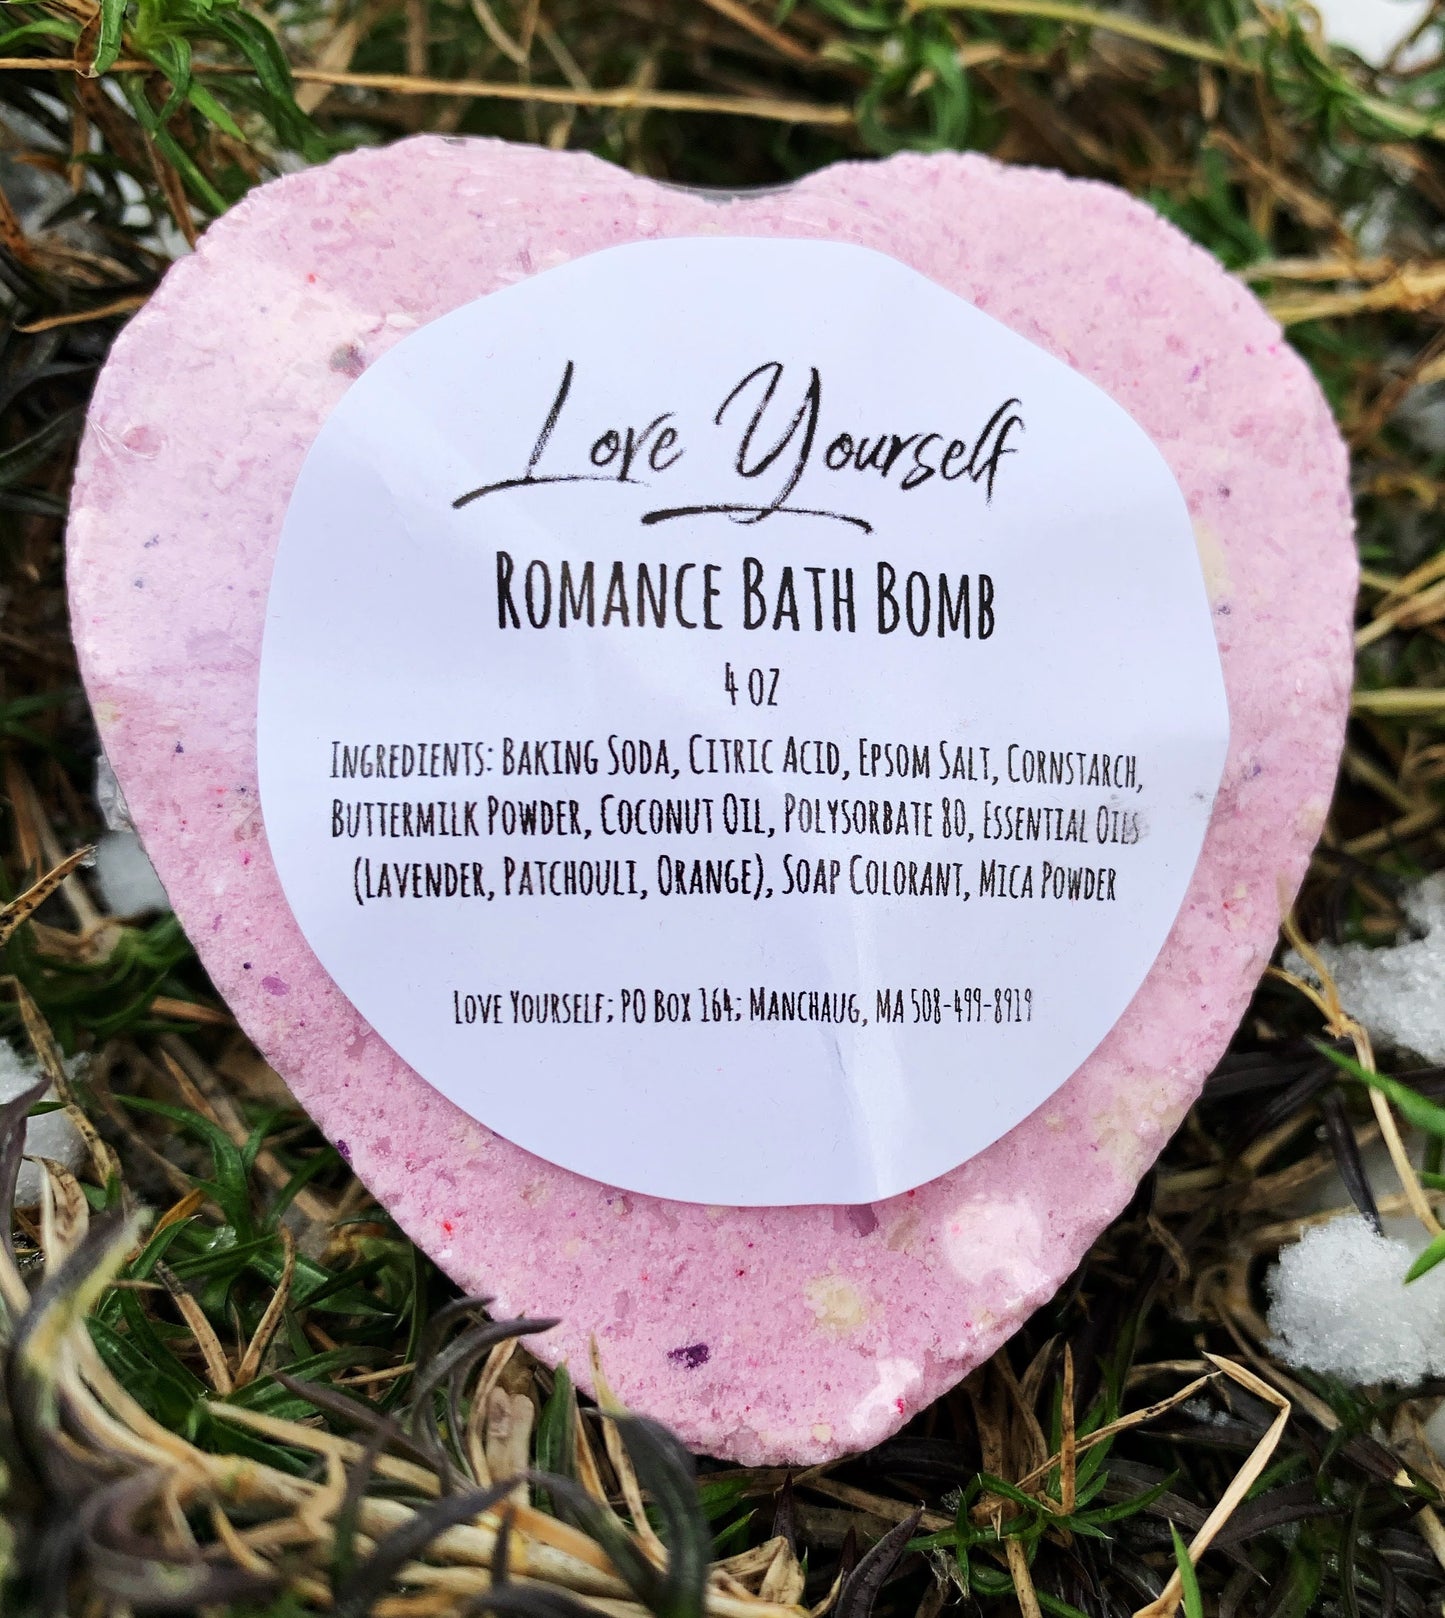 Romance Bath Bomb by Love Yourself